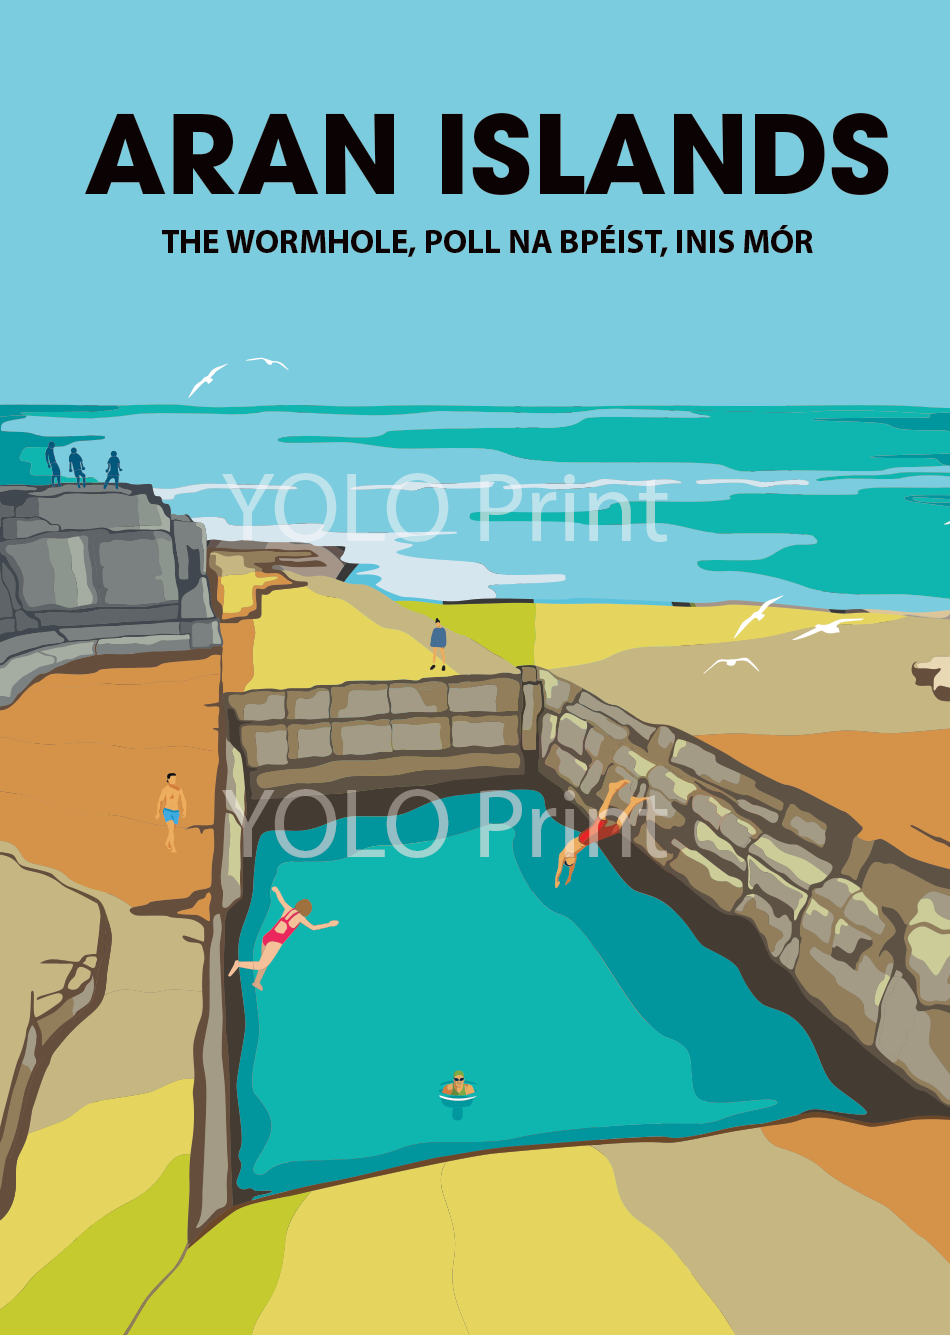 Aran Islands Postcard or A4 Mounted Print or Fridge Magnet - The Wormhole